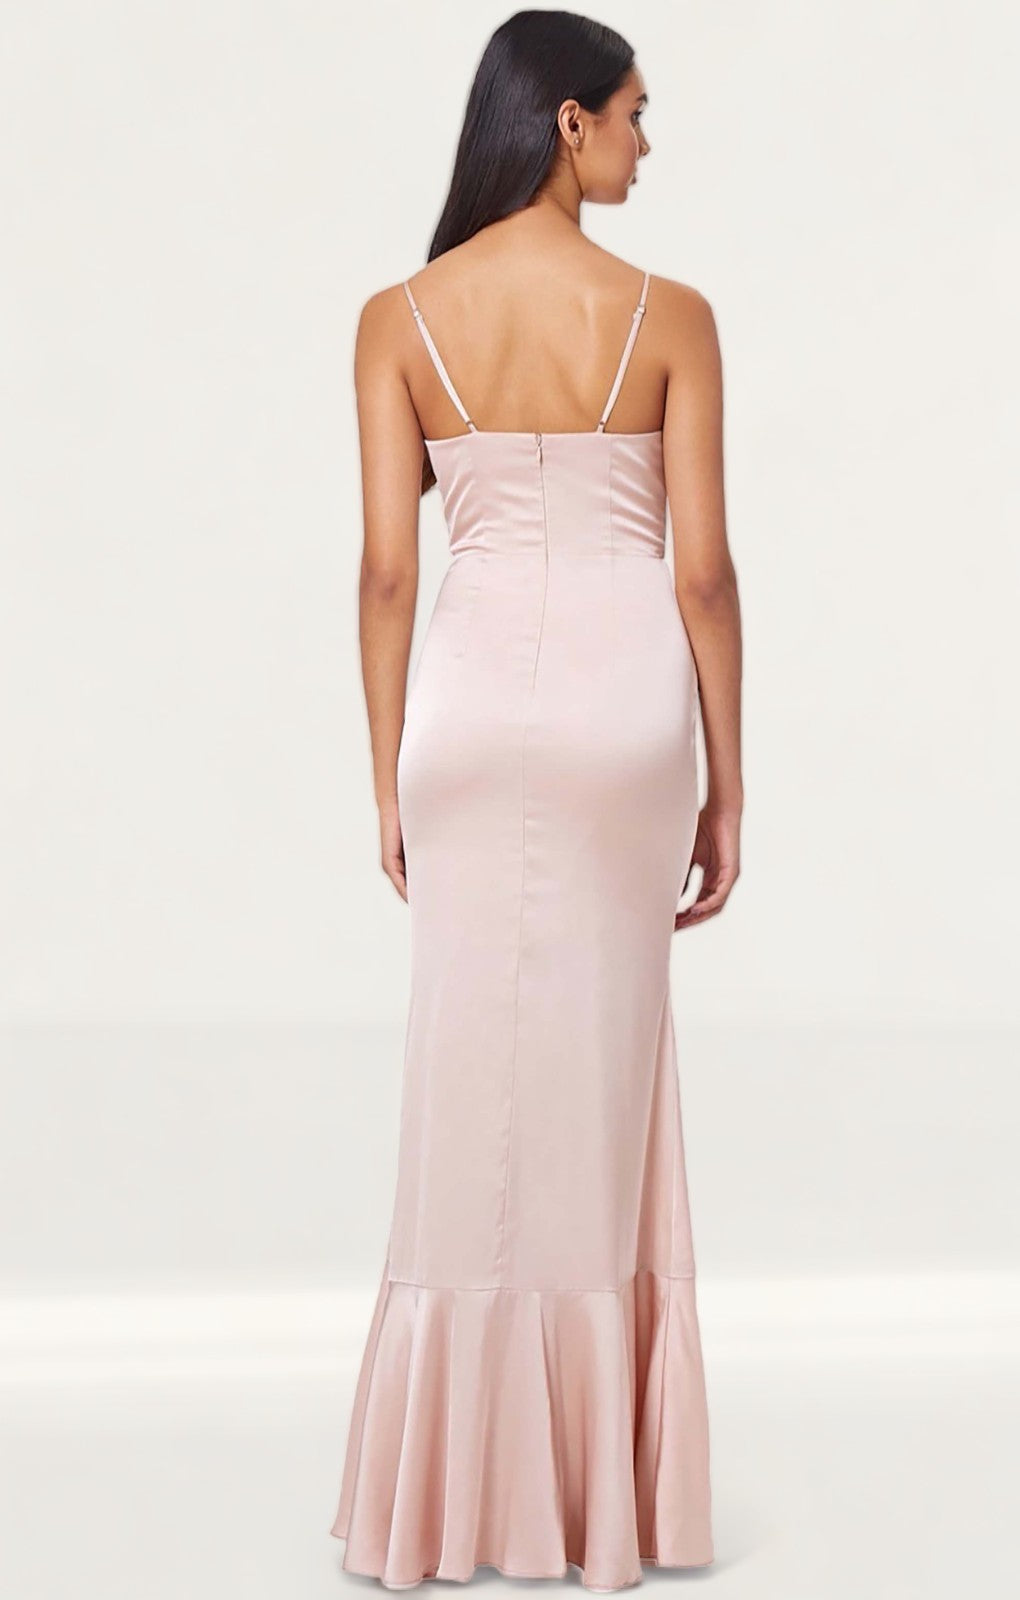 Jarlo Nude Pink Lily Dress product image